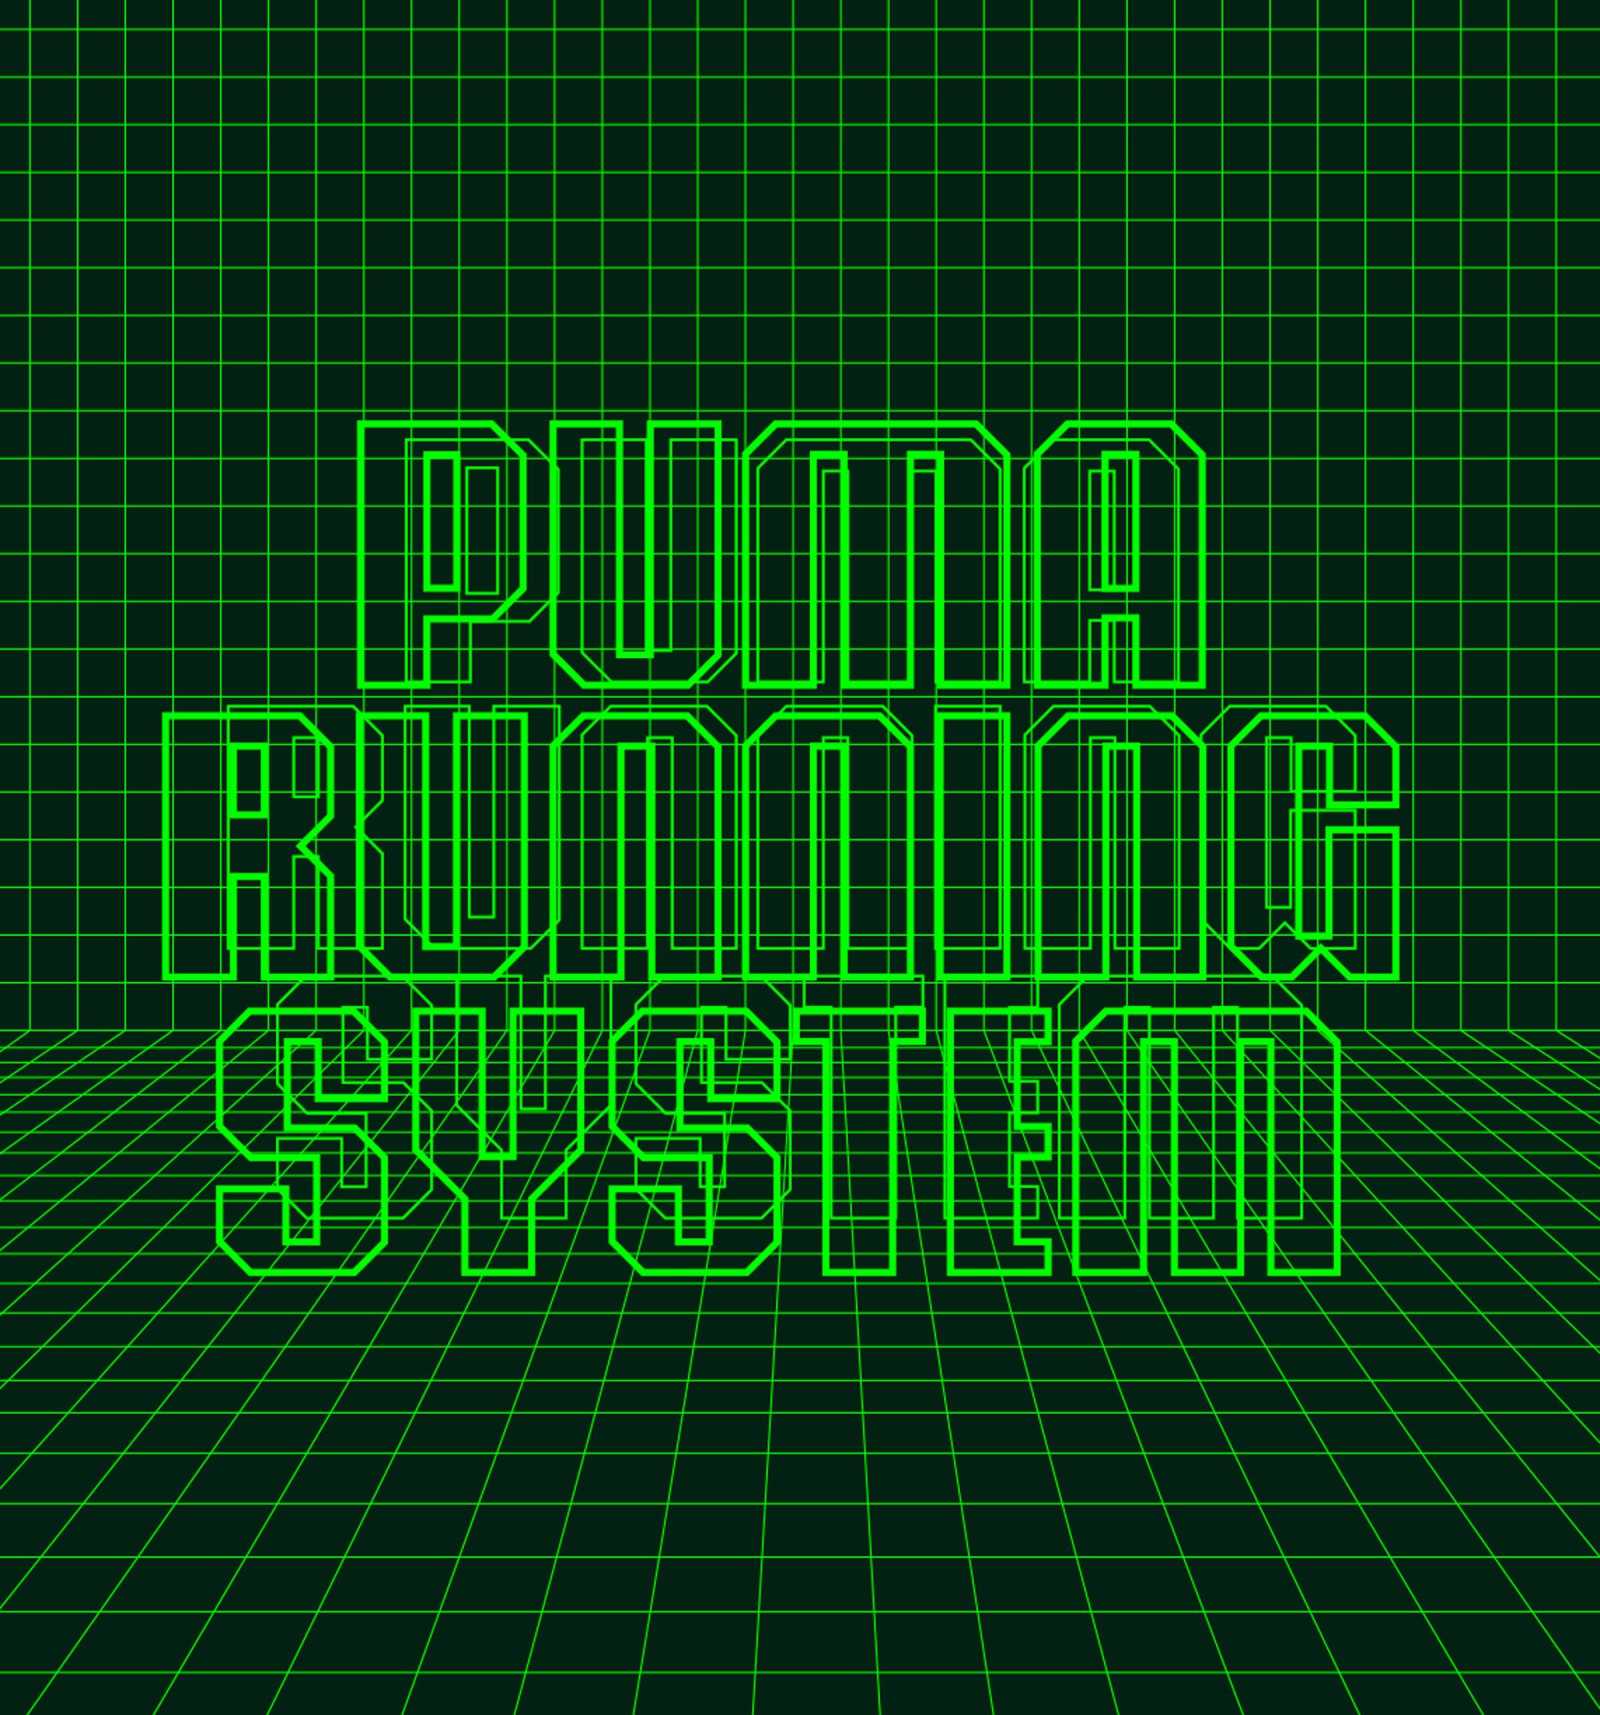 PUMA – The Graphic Heritage